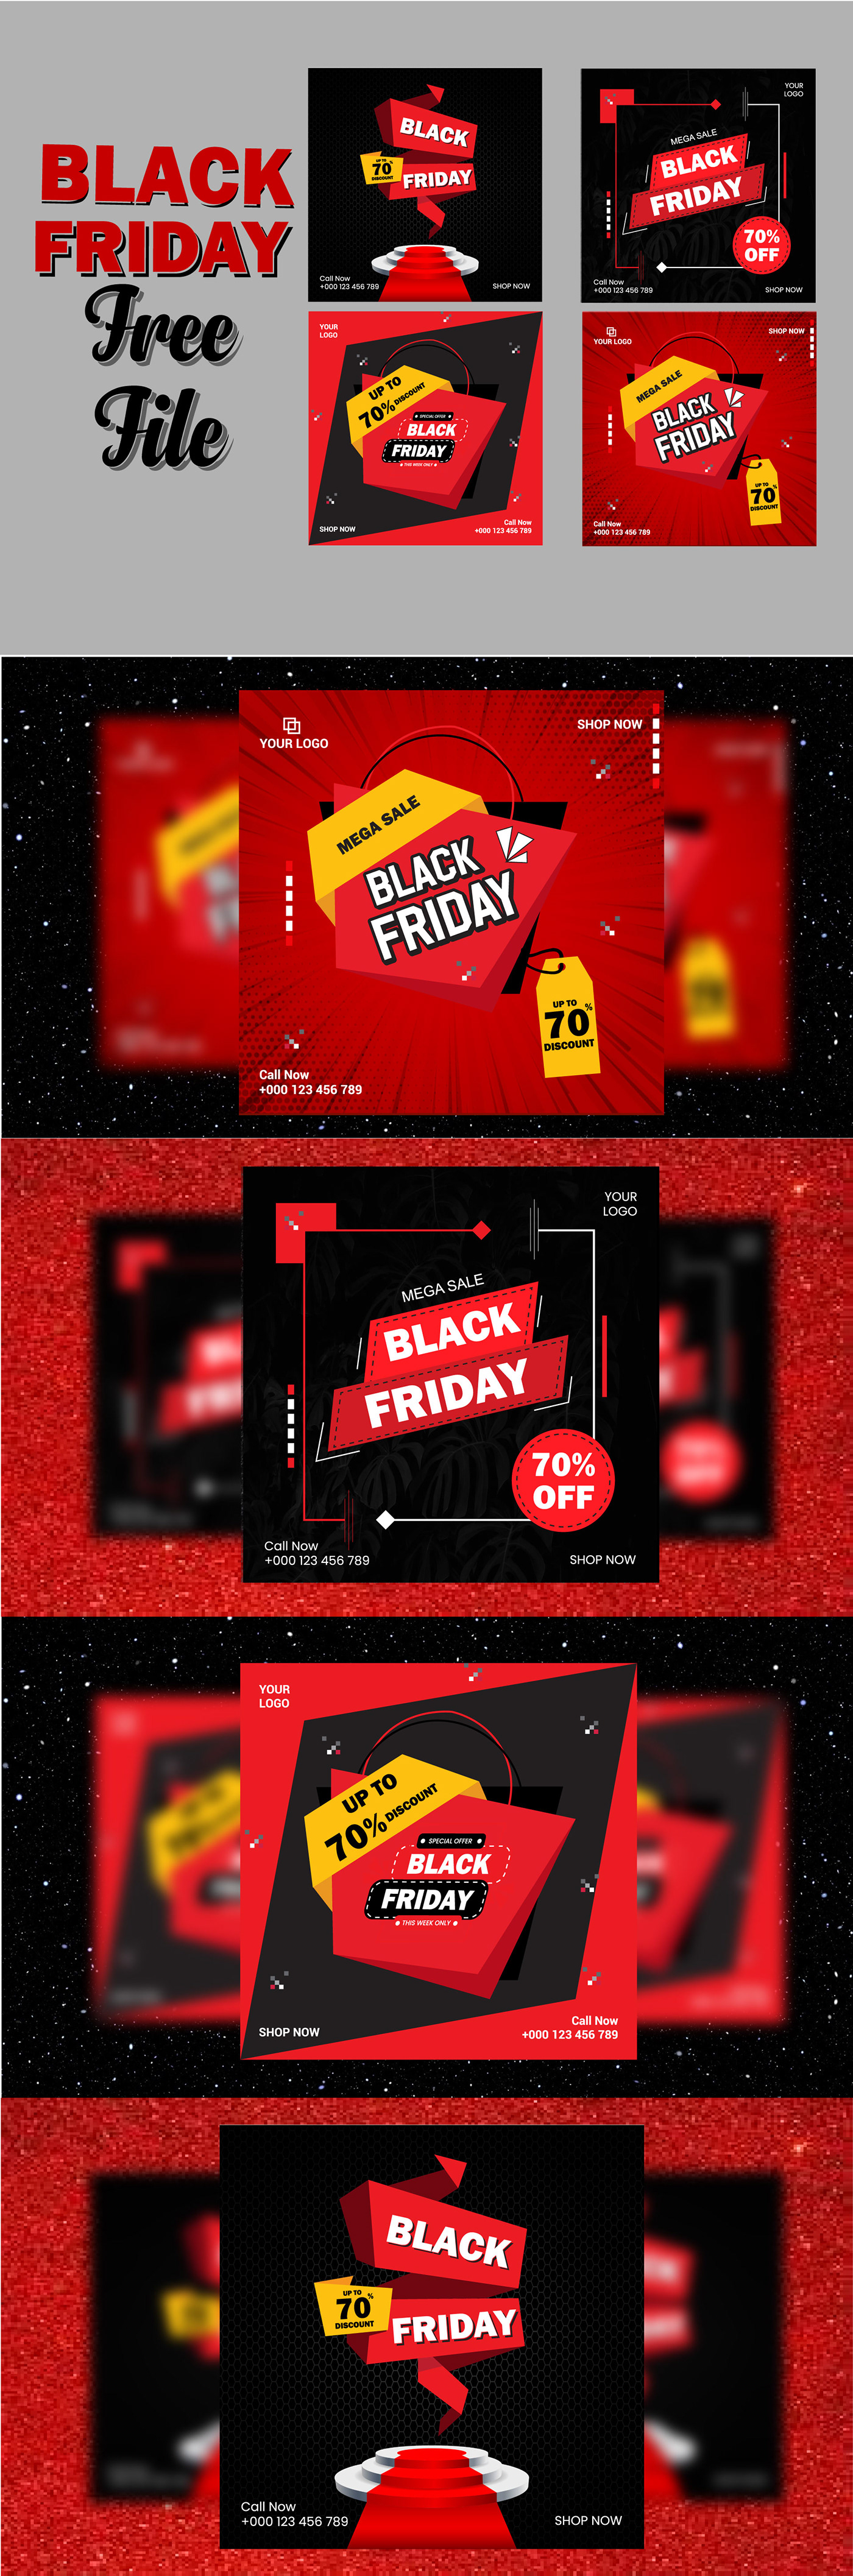 download Social media post blackfridaysale banner designer Advertising  ads blackfridaydiscount free file